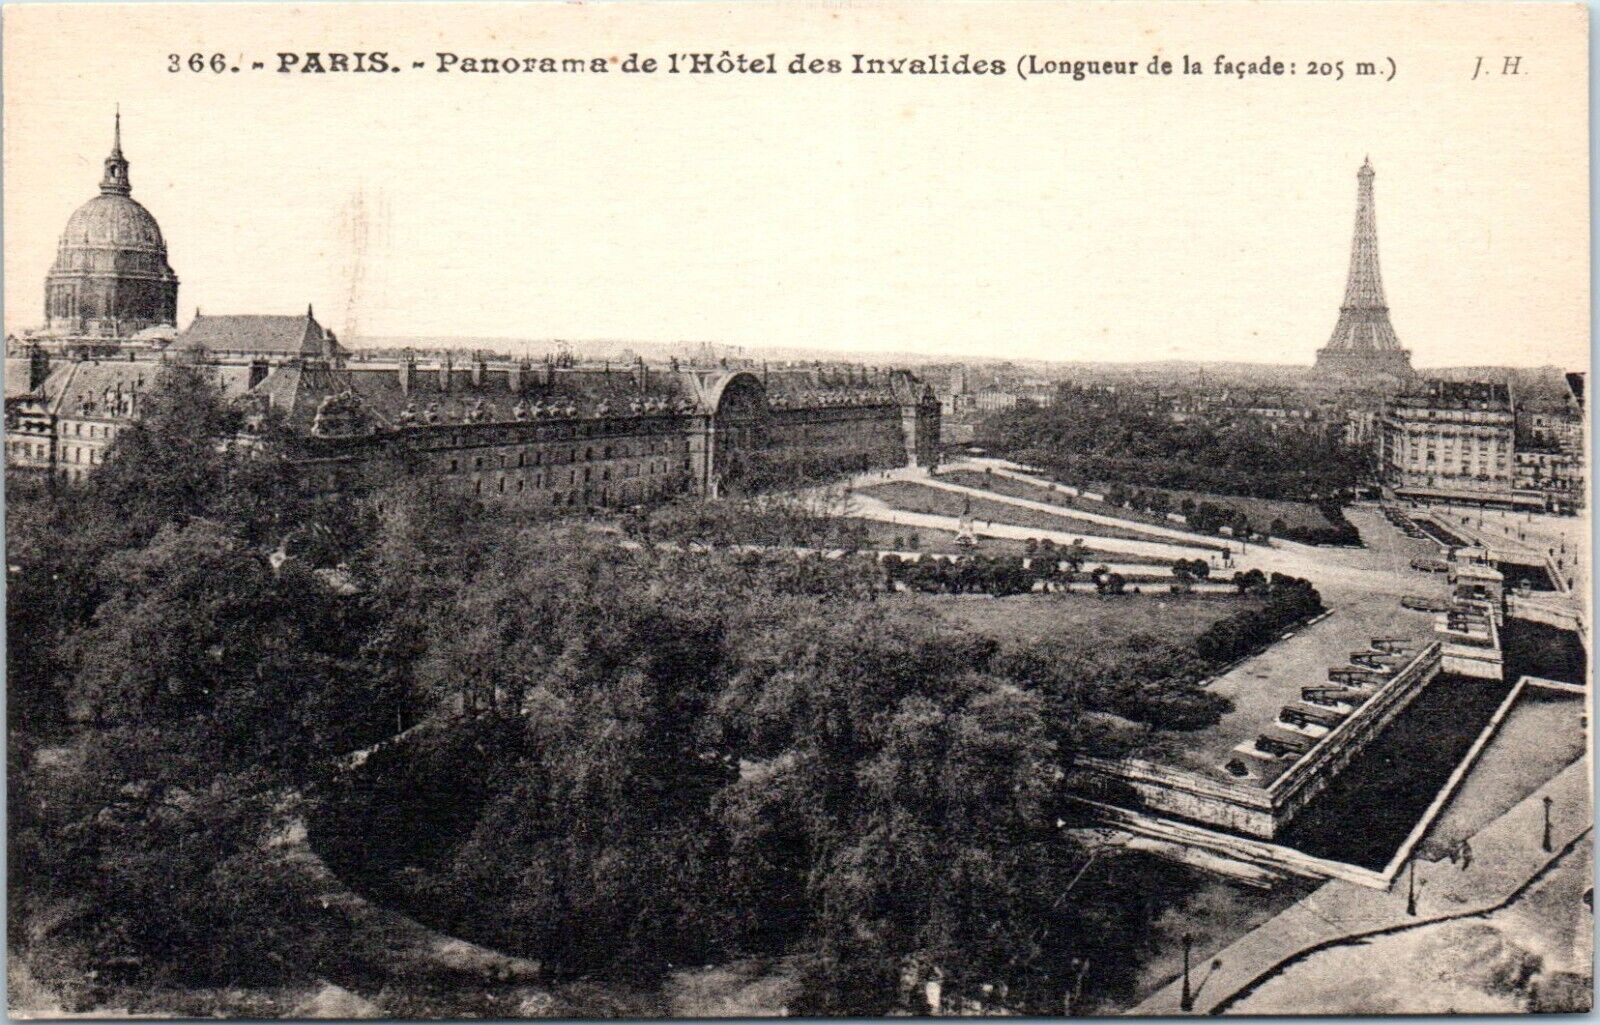 Panorama of Hotel des Invalides, Paris, France Postcard